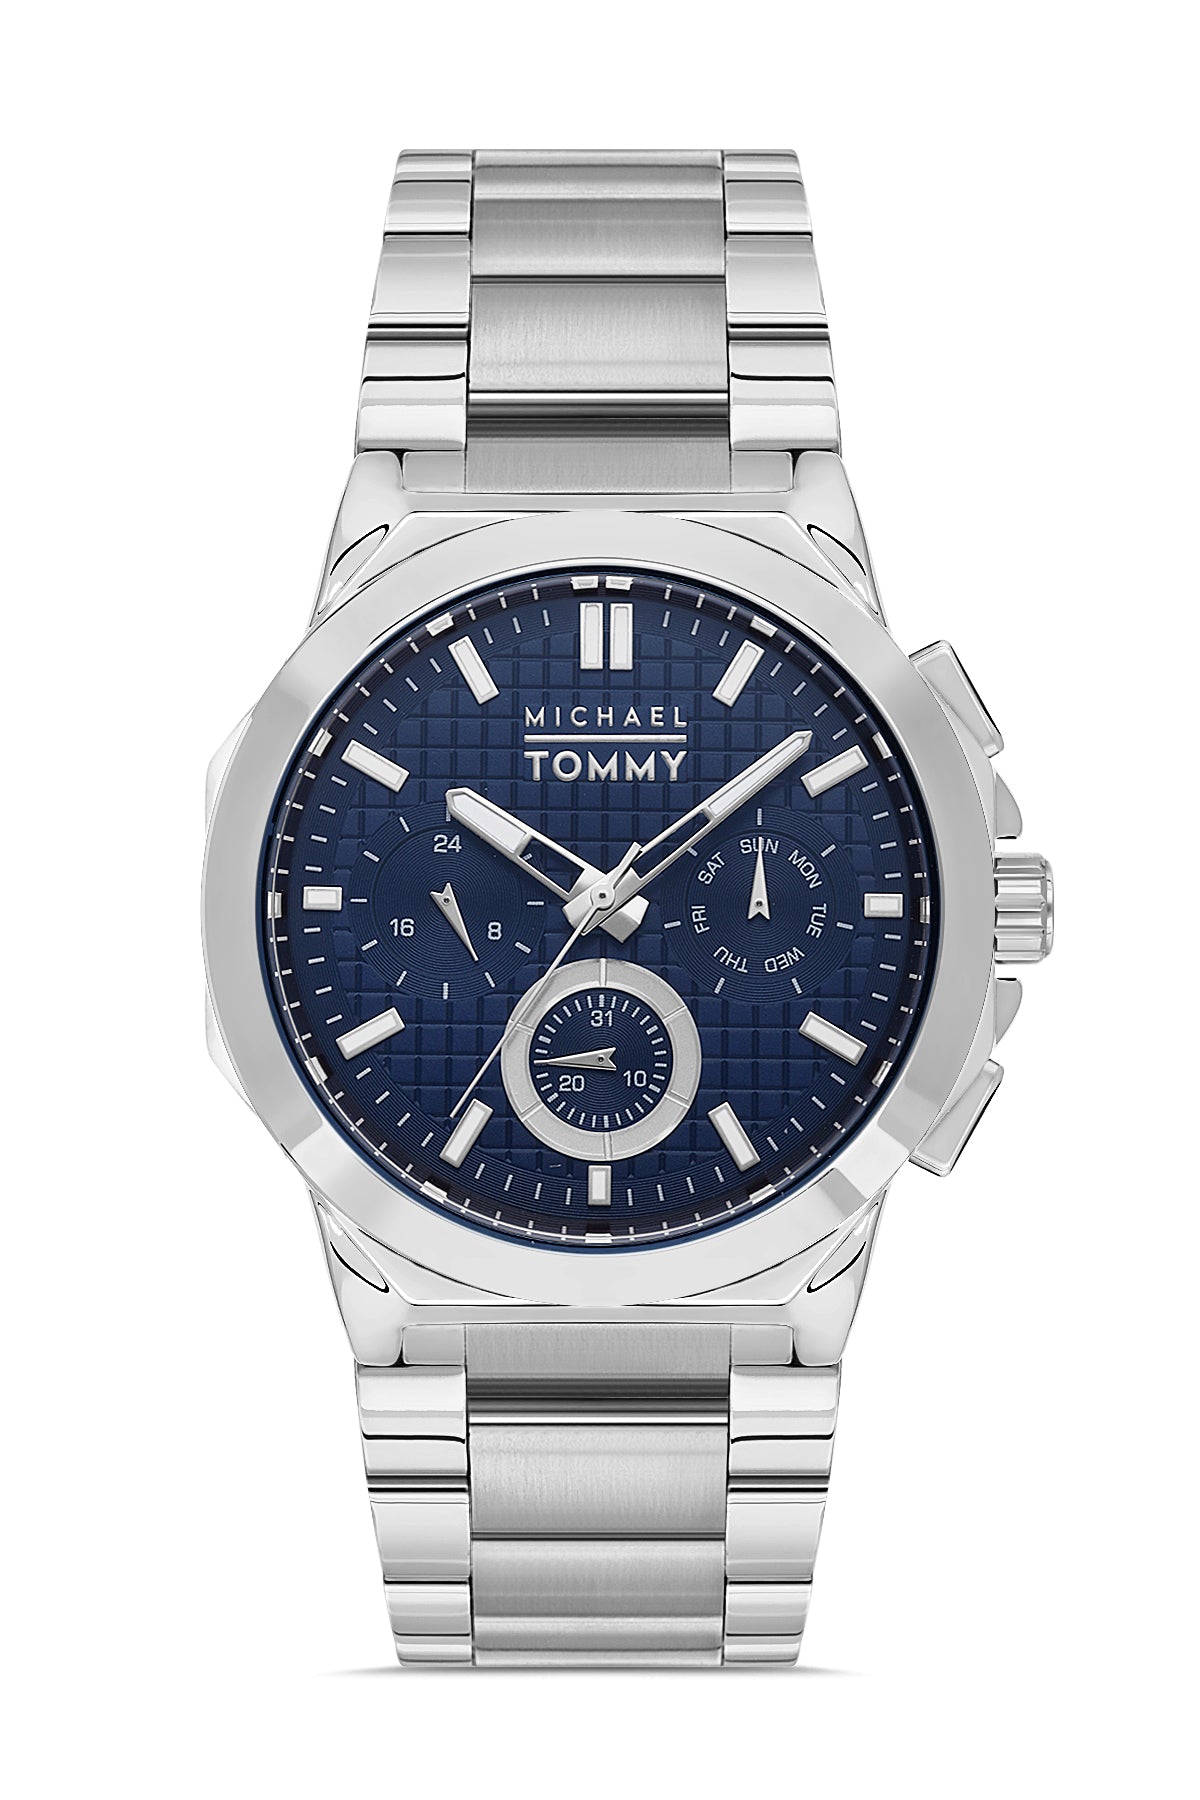 Michael Tommy Men's Watch MT-31002G-BBL14